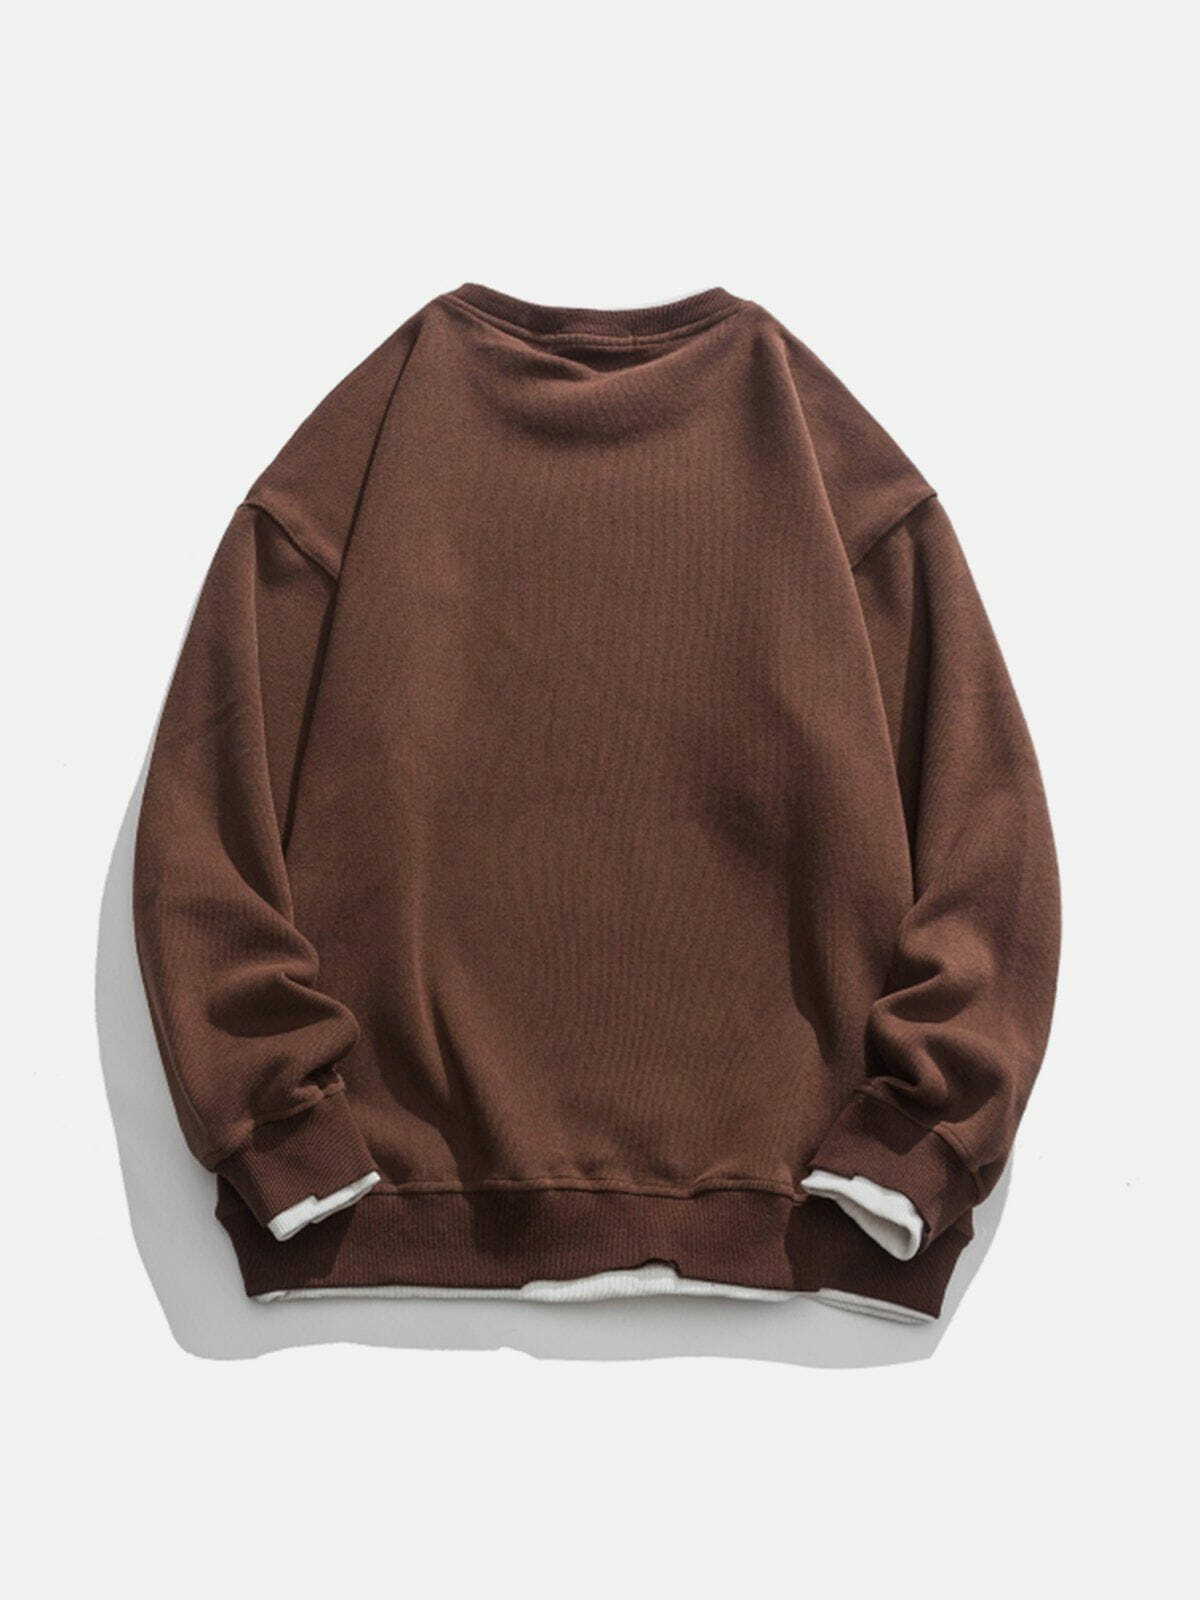 youthful fake two sweatshirt edgy  retro streetwear top 1863